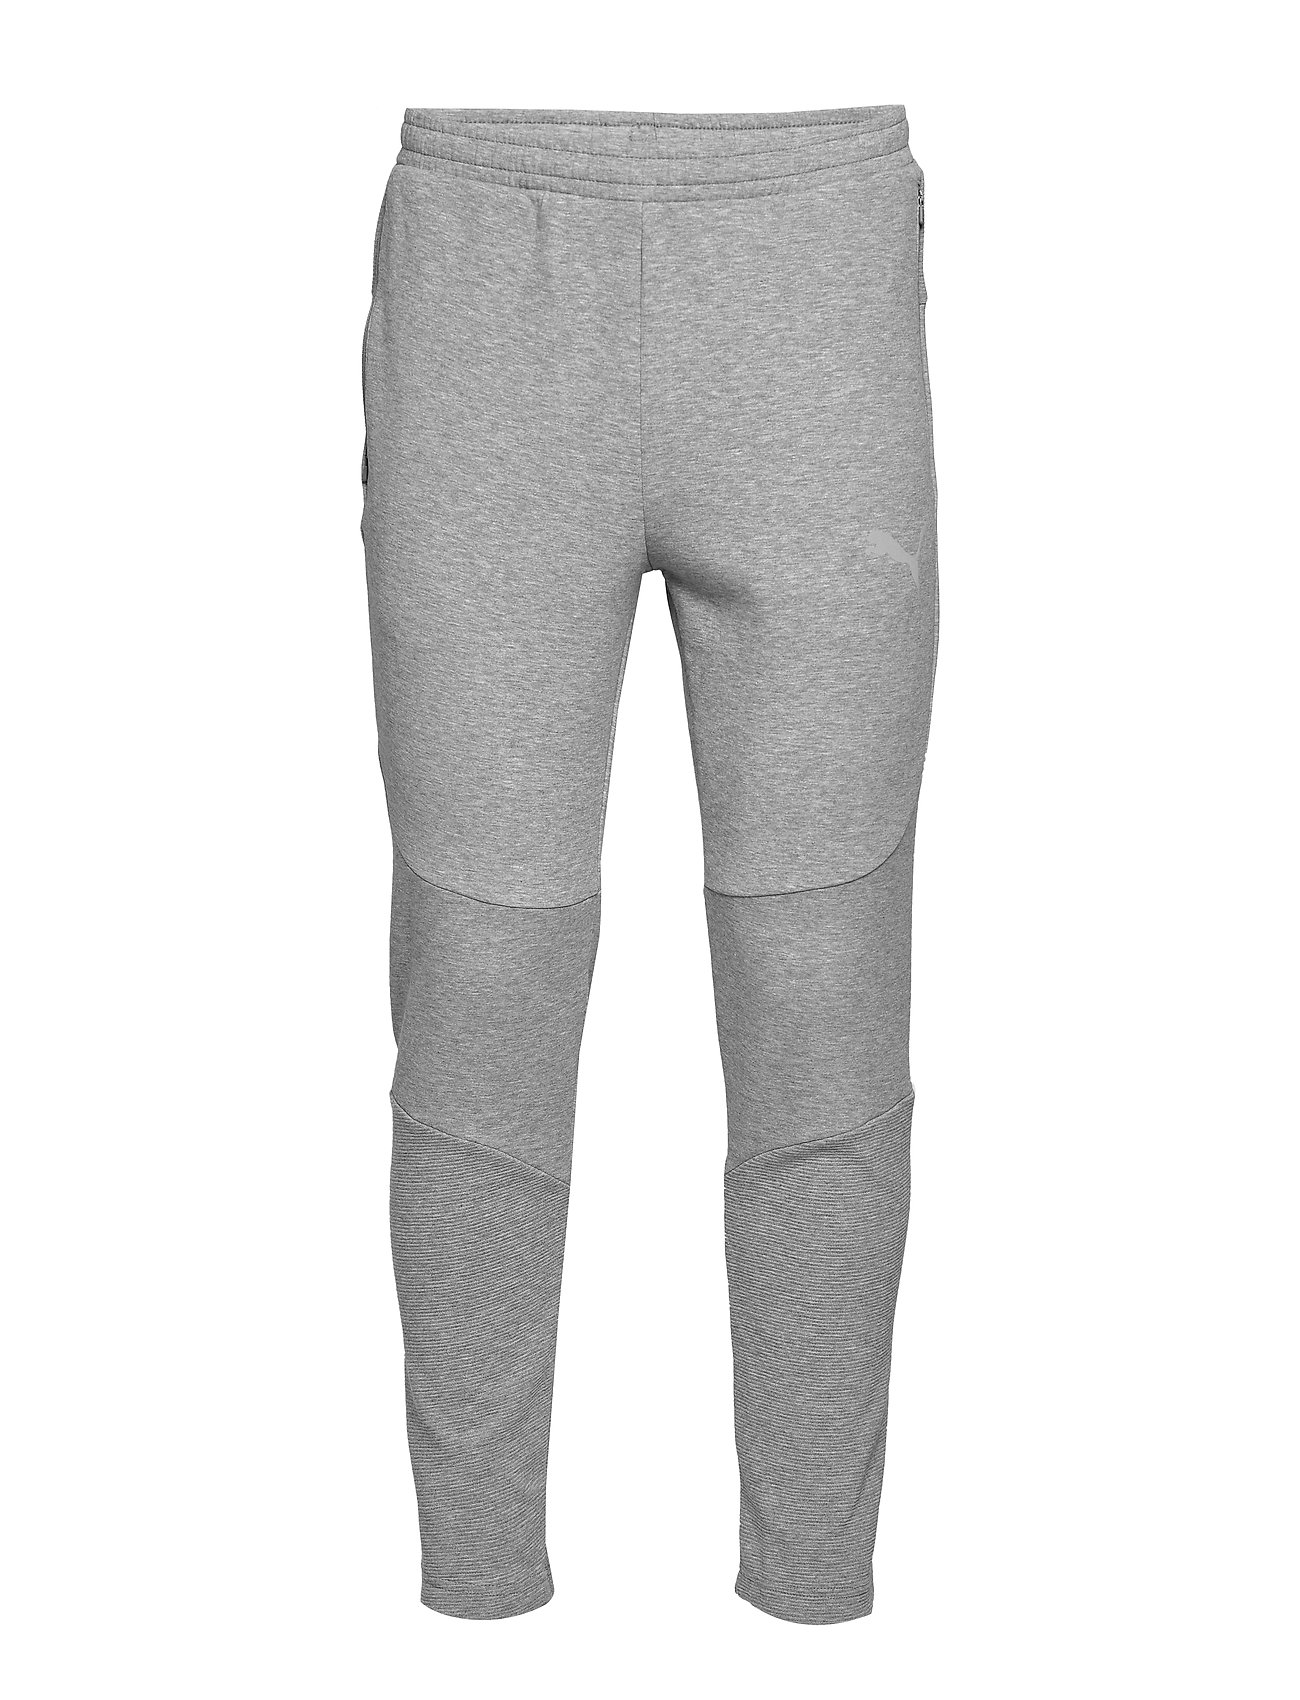 PUMA Evostripe Pants (Medium Gray 